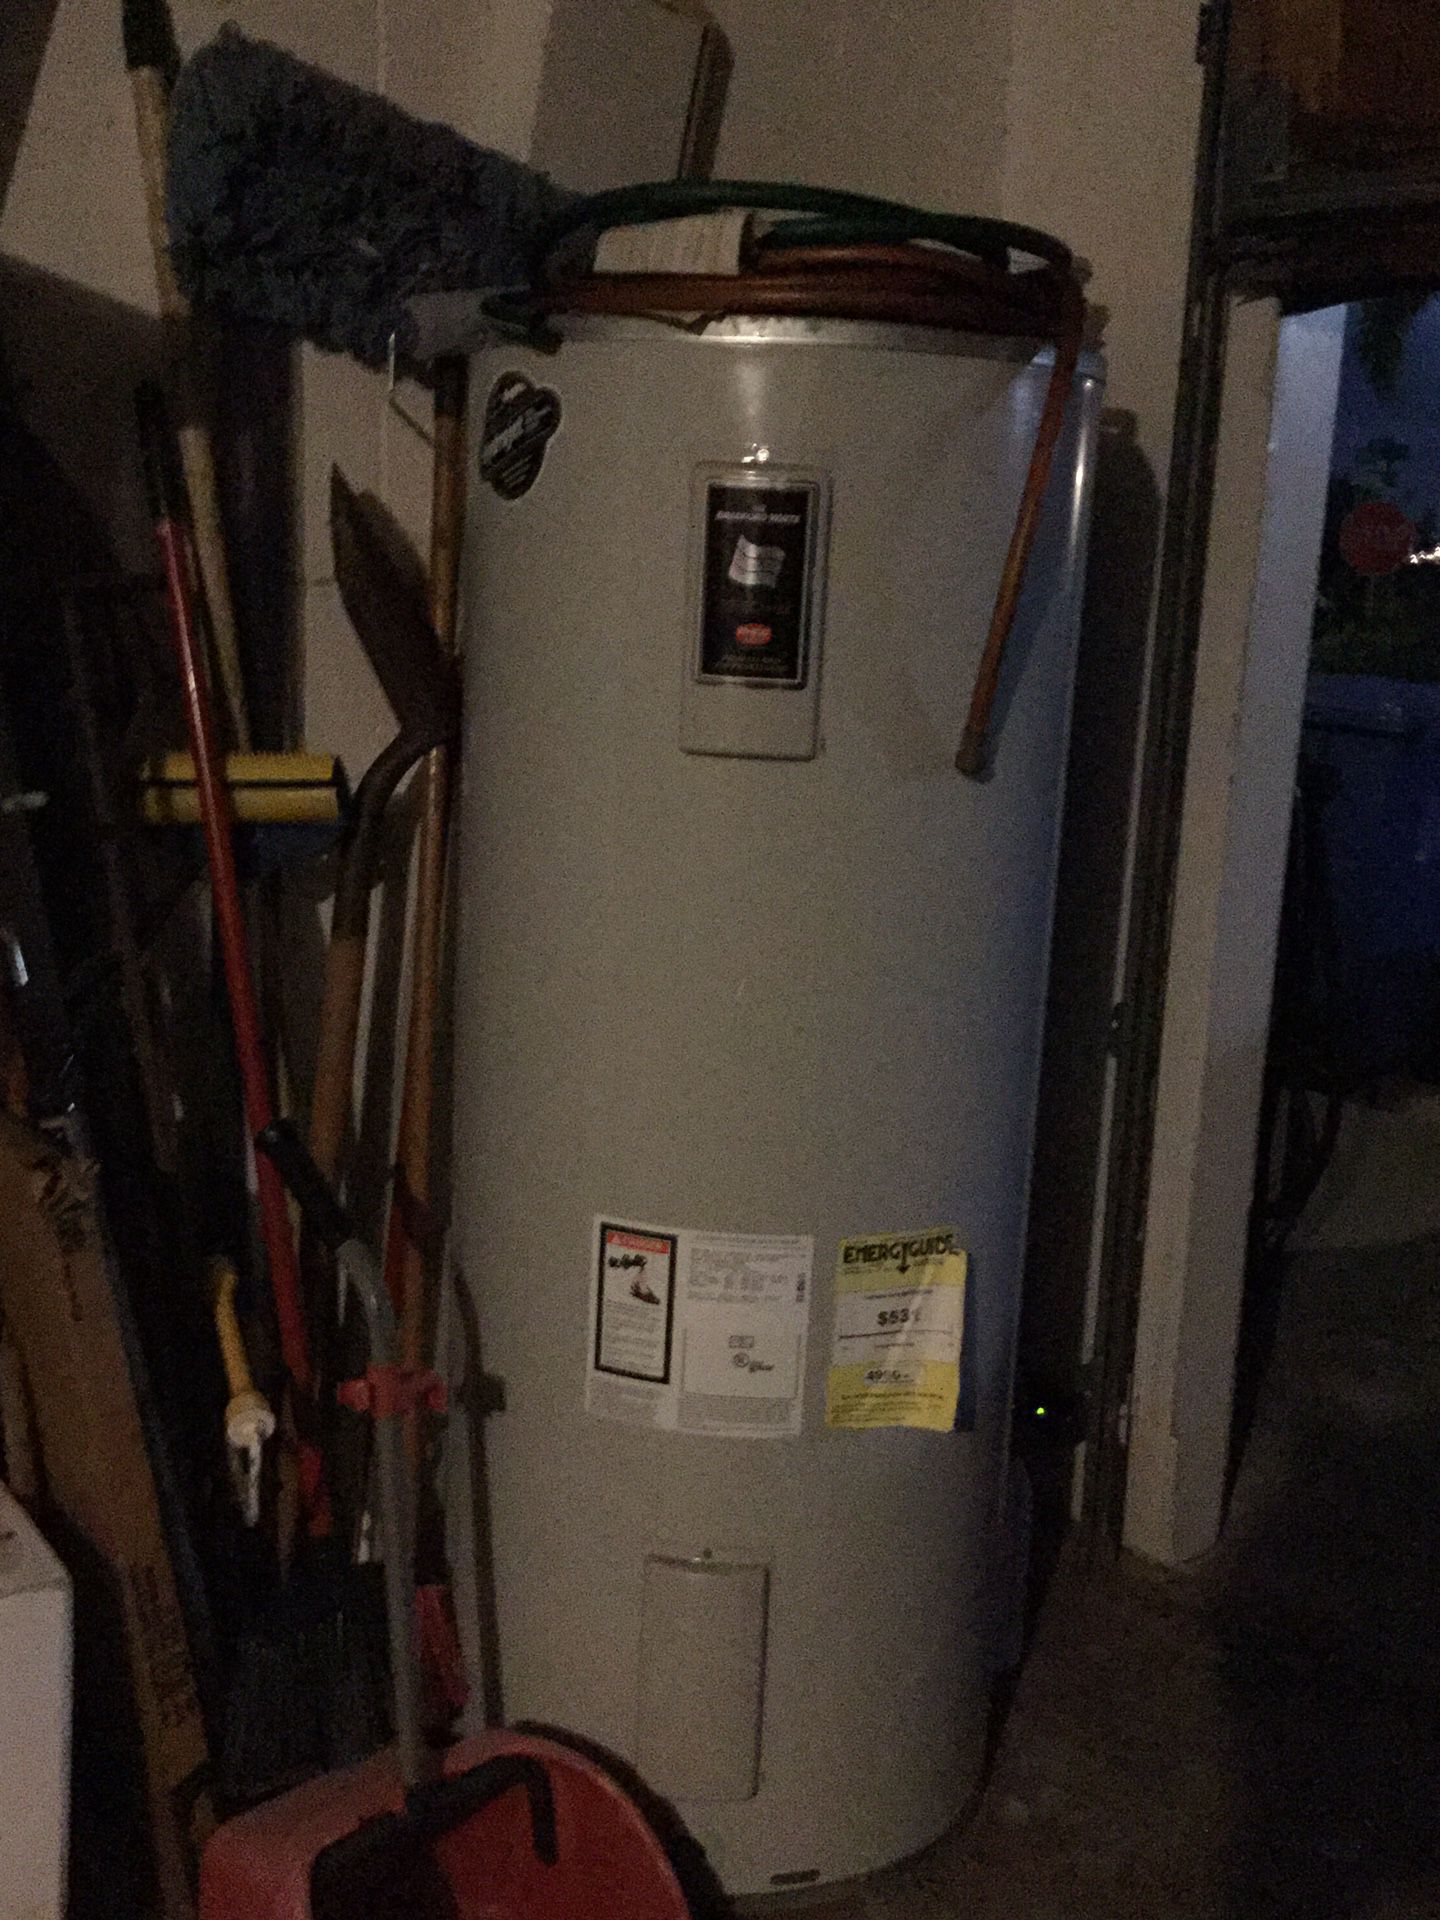 Fairly new Bradford White 80 gallon water heater